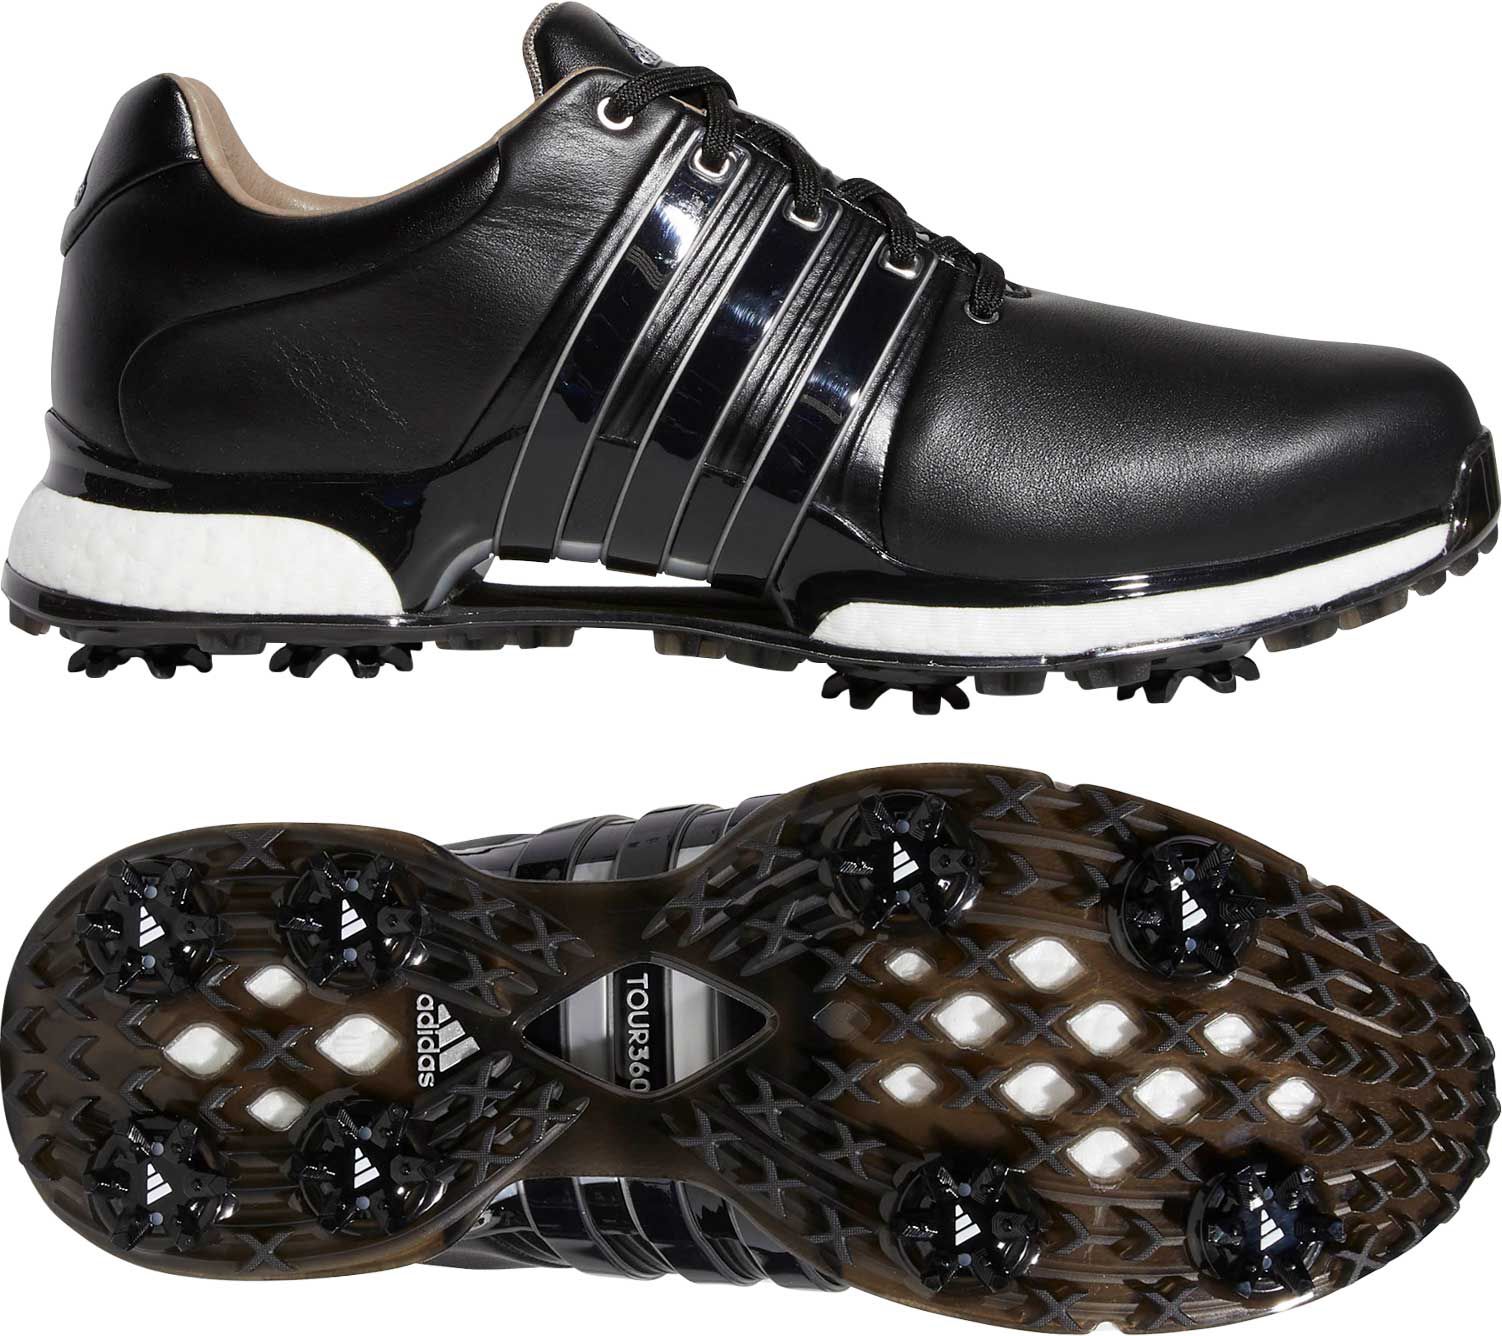 adidas 360 tour xt golf shoes